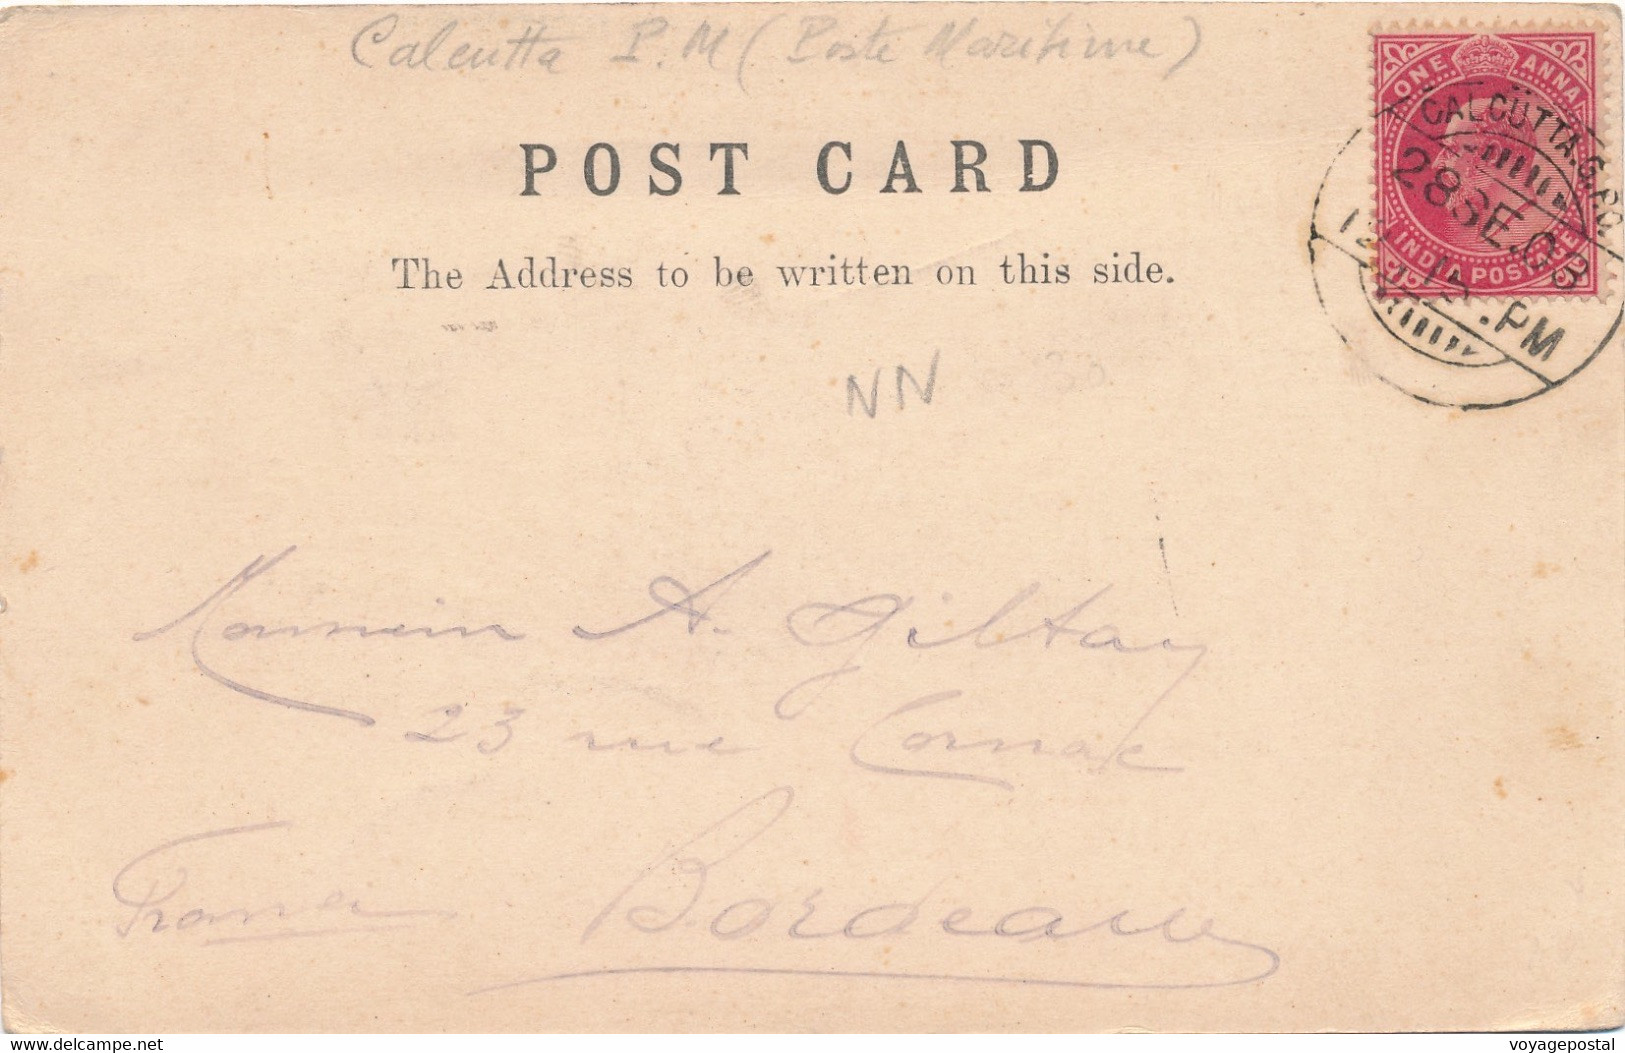 CARTE INDE CALCUTTA GPO PM POSTE MARITIME BORDEAUX COVER CARD INDIA - 1902-11 Koning Edward VII